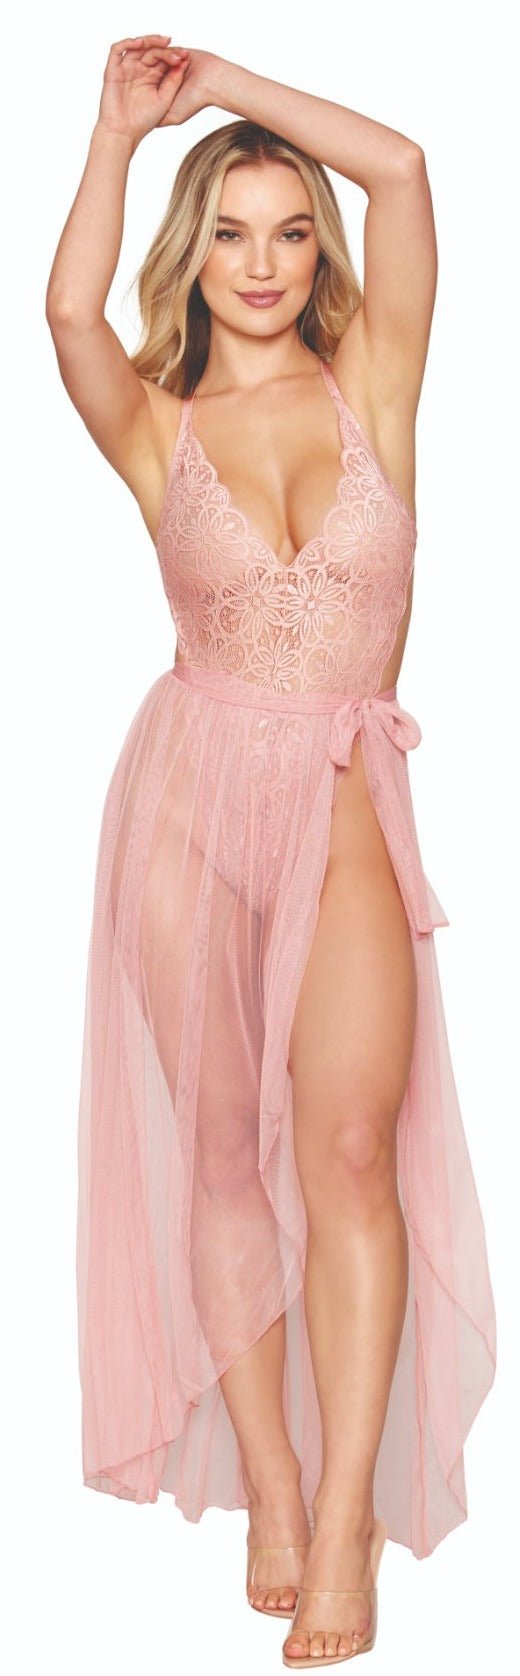 Stunning Lace Bodysuit with Sheer Skirt Lingerie Set Musotica.com